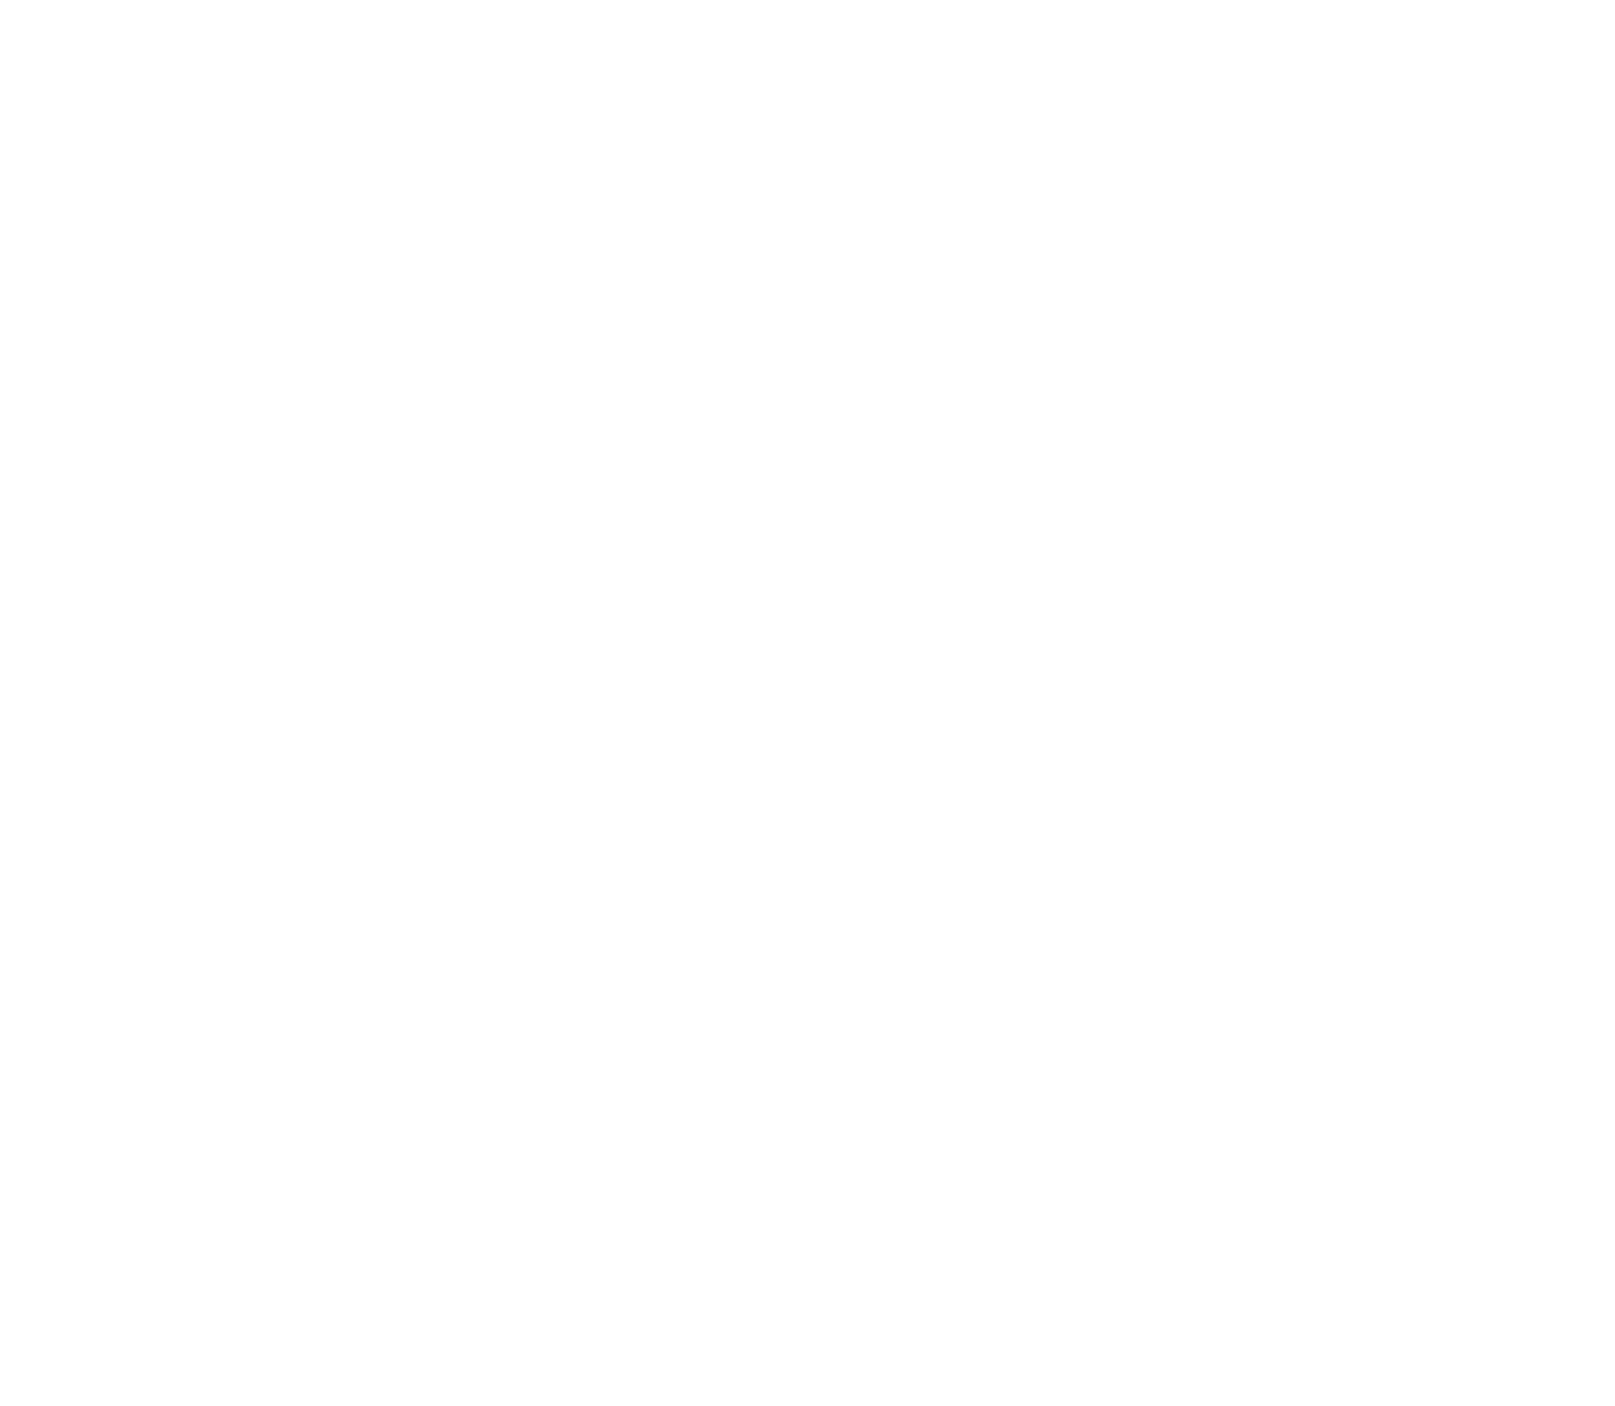 ISS A/S logo pour fonds sombres (PNG transparent)